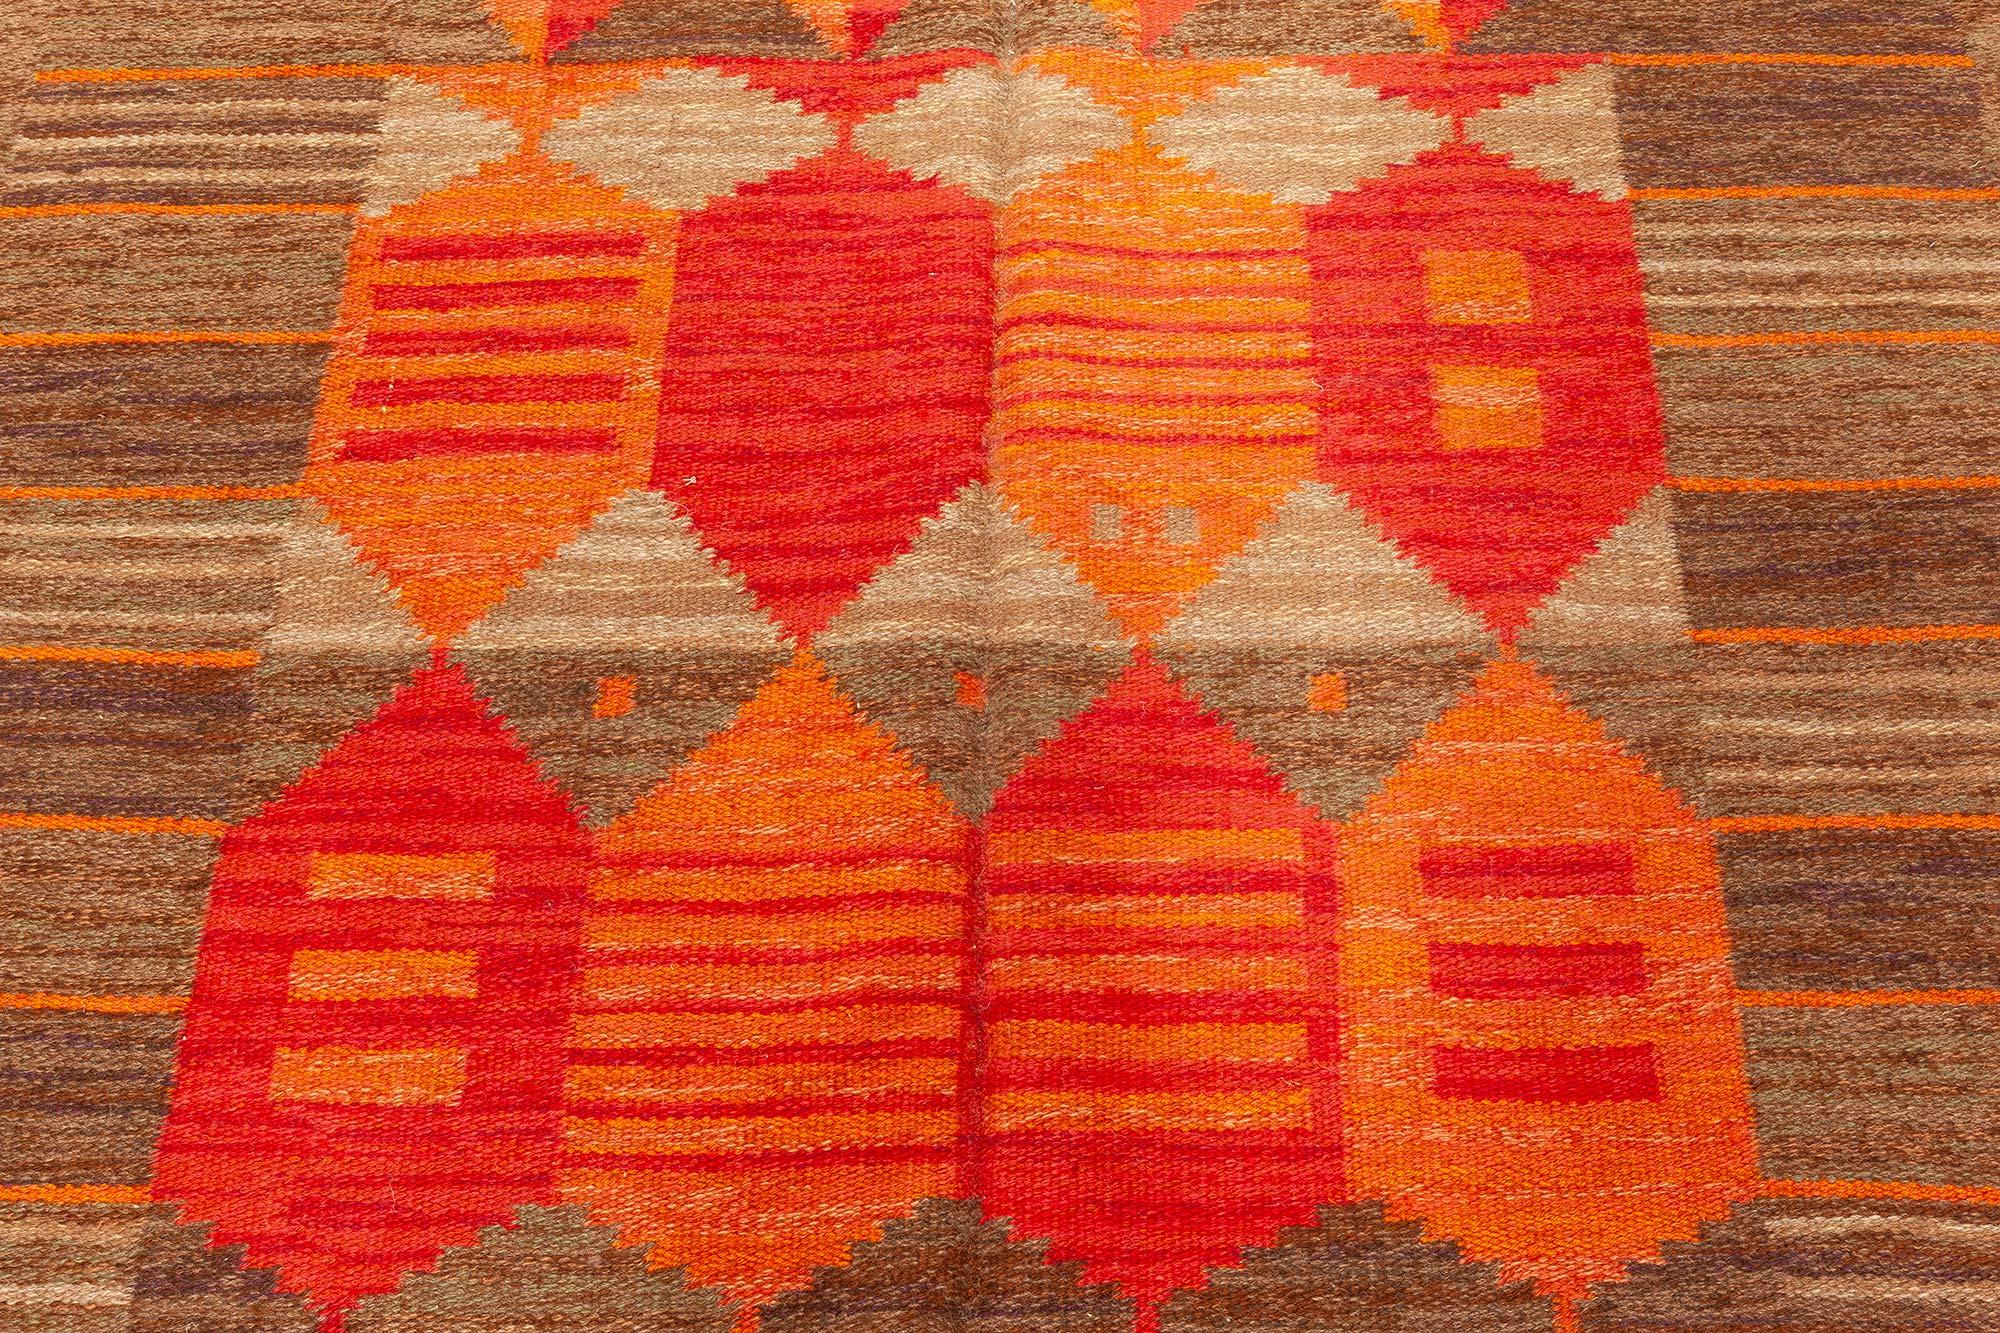 Midcentury Swedish red, orange and brown flat-woven rug by Karin Jönsson 'Klockargården Hemslöjd'
Size: 5'0